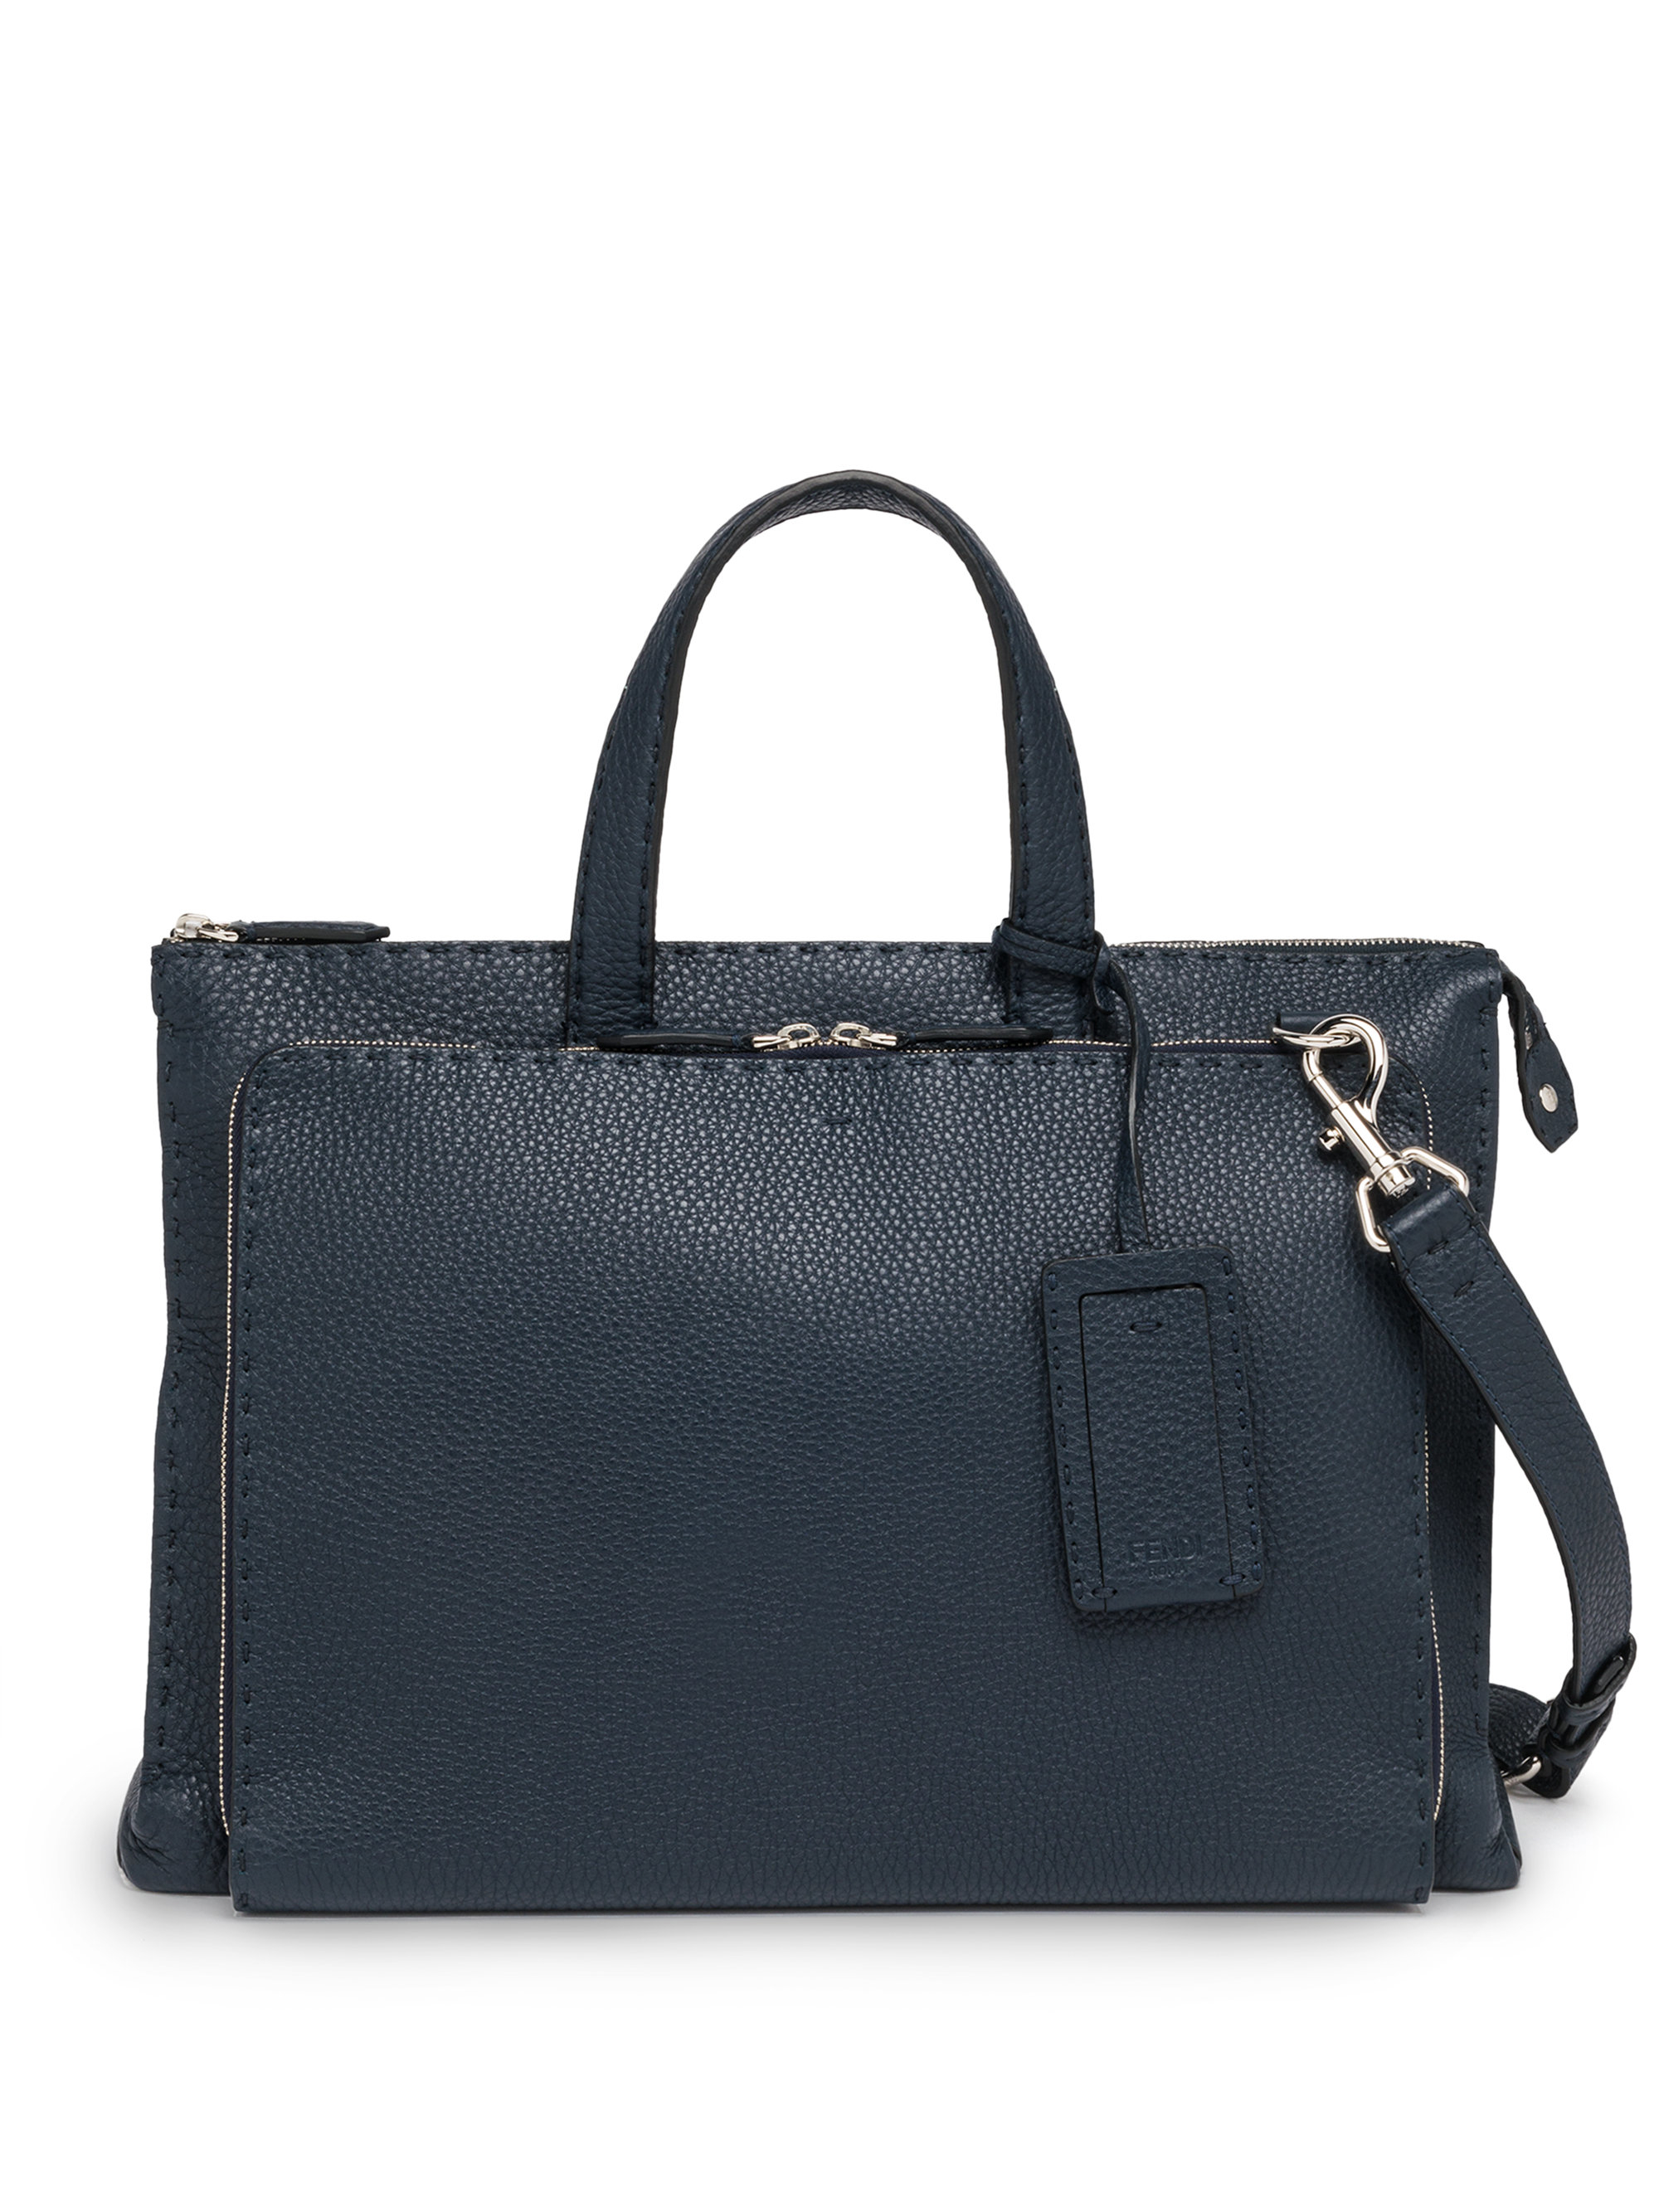 Fendi Selleria Leather Business Bag in 